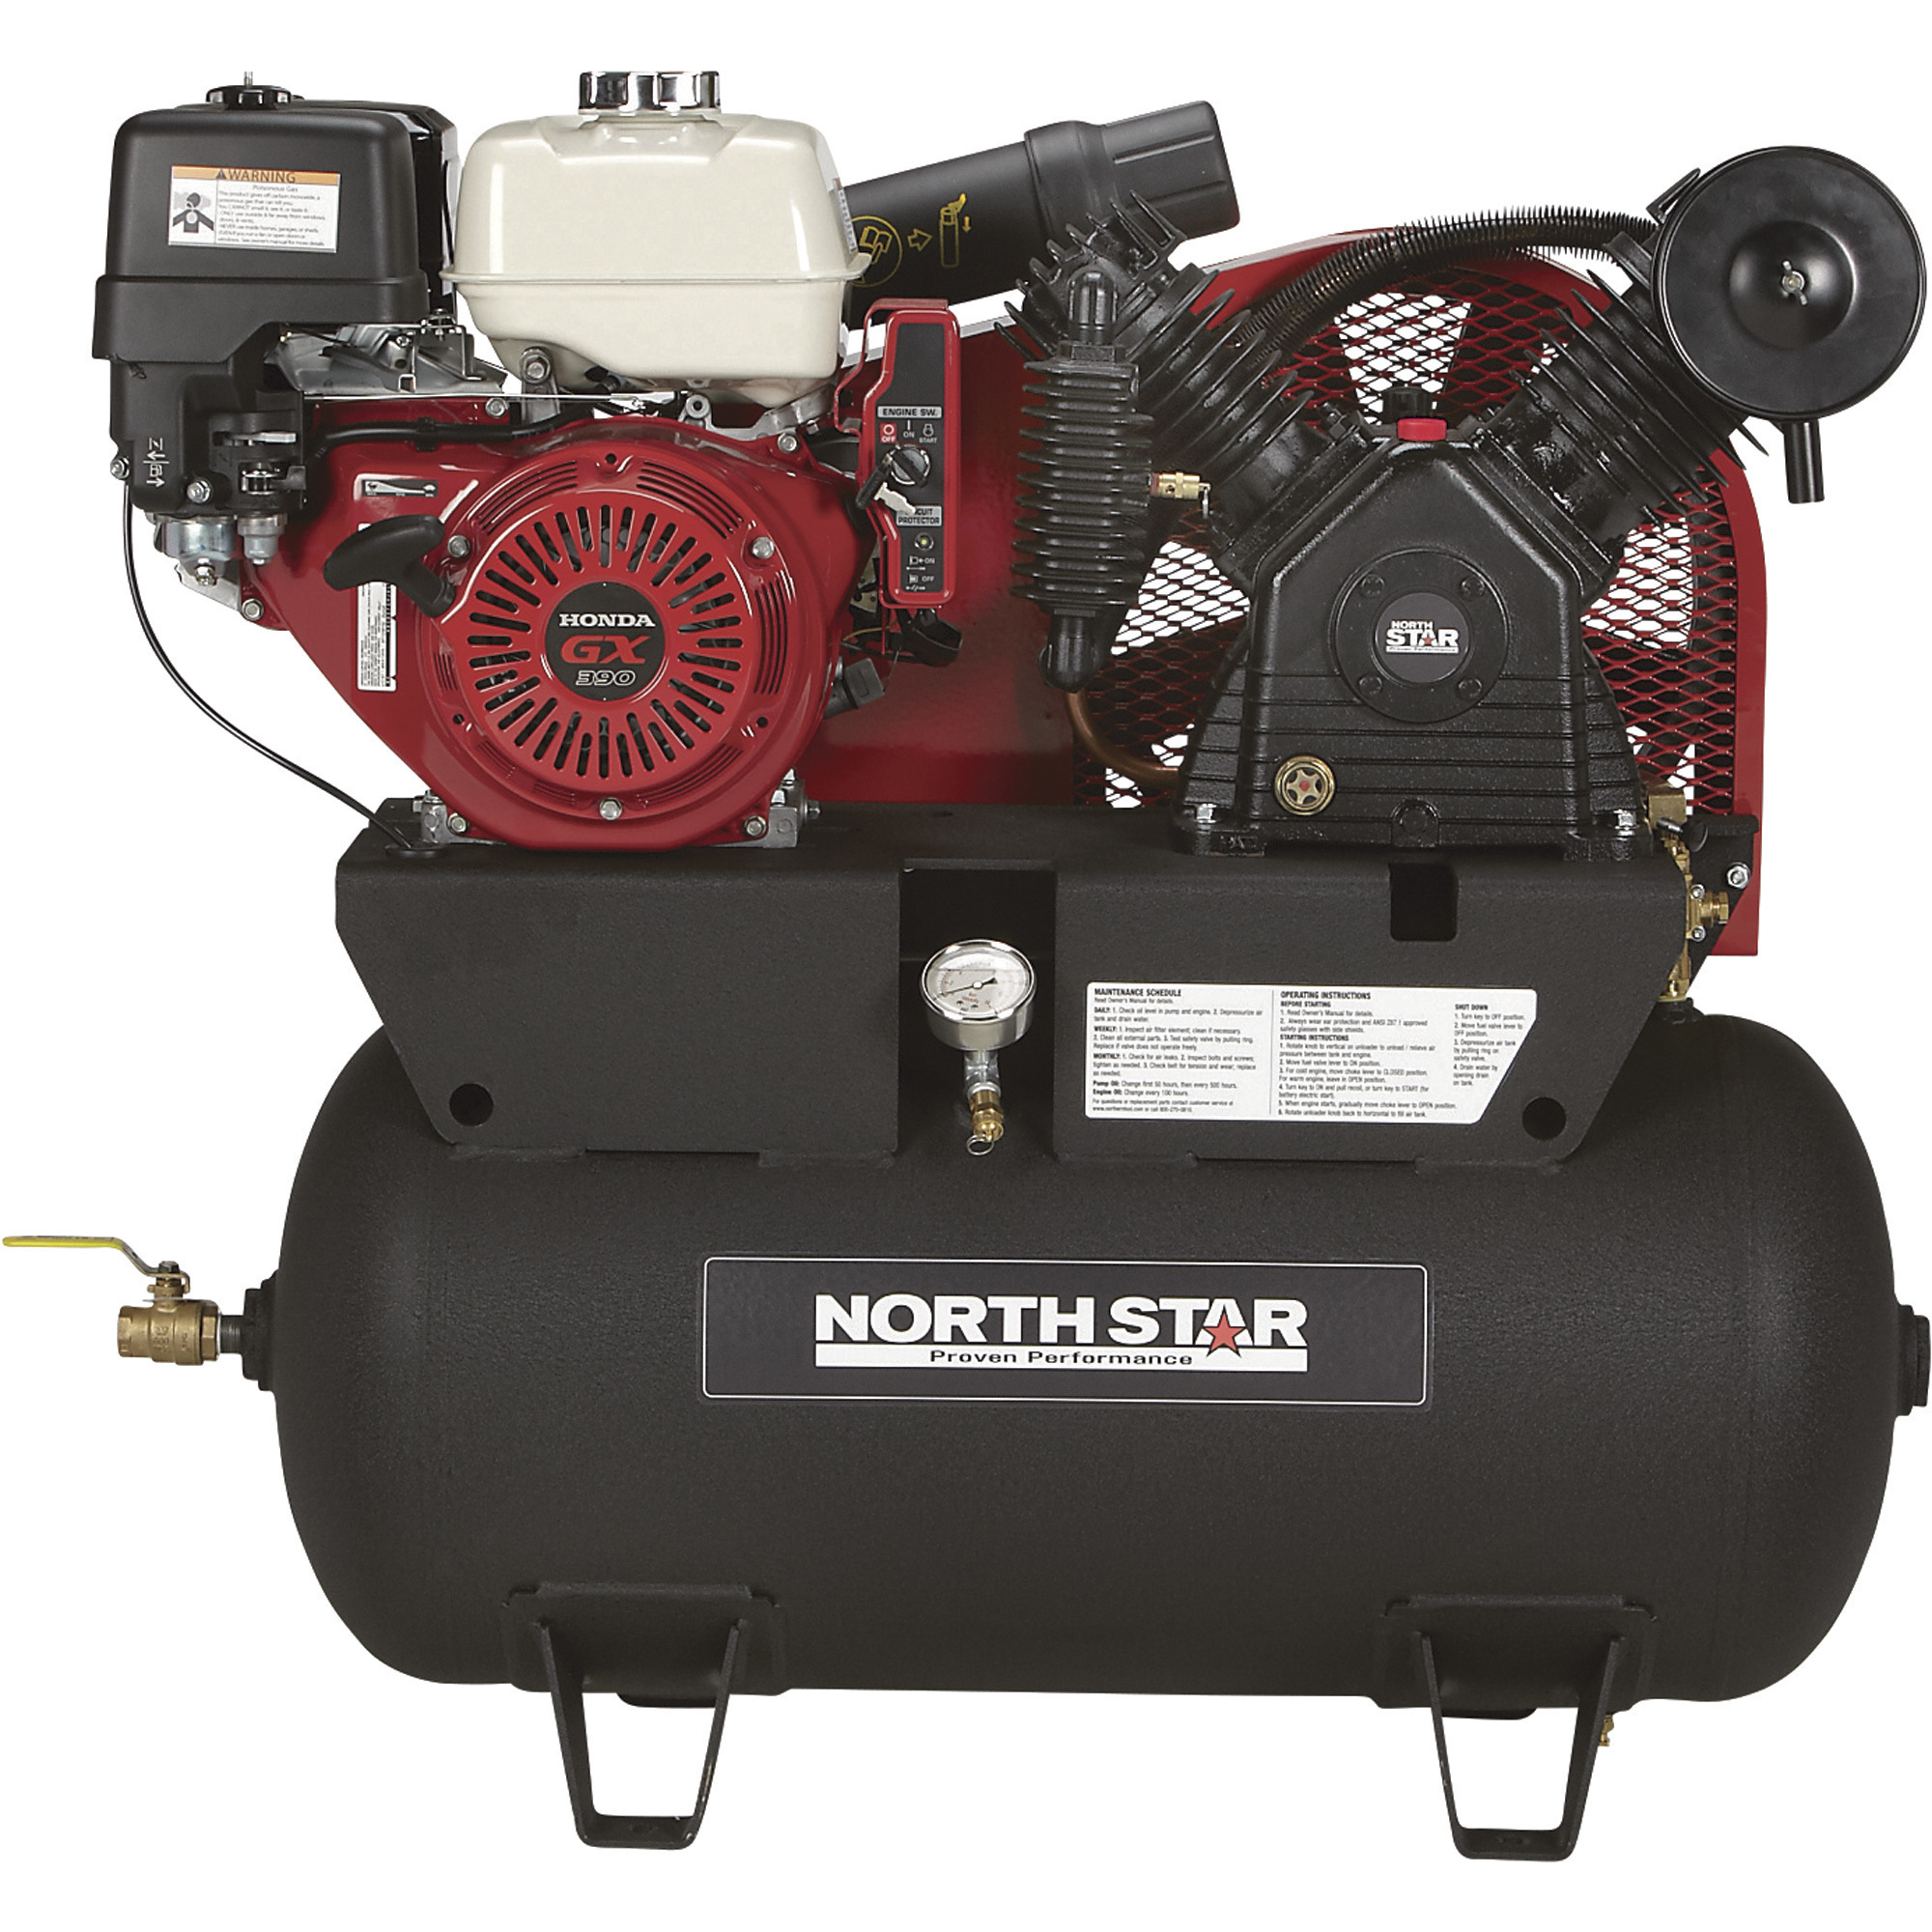 NorthStar Portable Gas Air Compressor - 30-Gallon Horizontal, 24.4 CFM @ 90 PSI, Honda GX390 OHV Engine